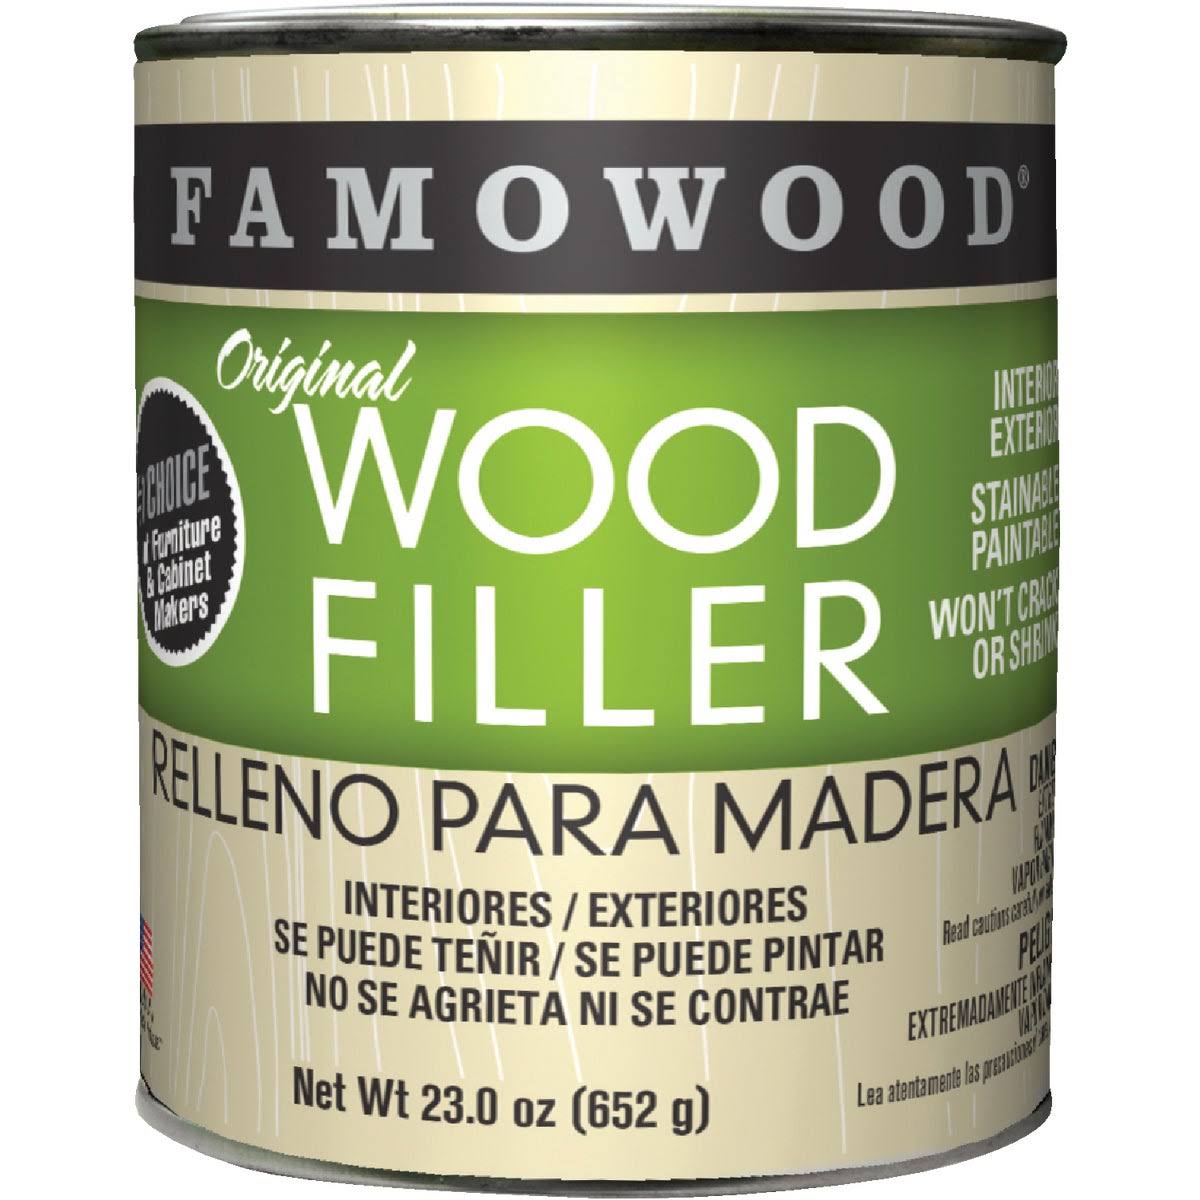 Famo Wood Original Wood Filler - 1/4 Pint